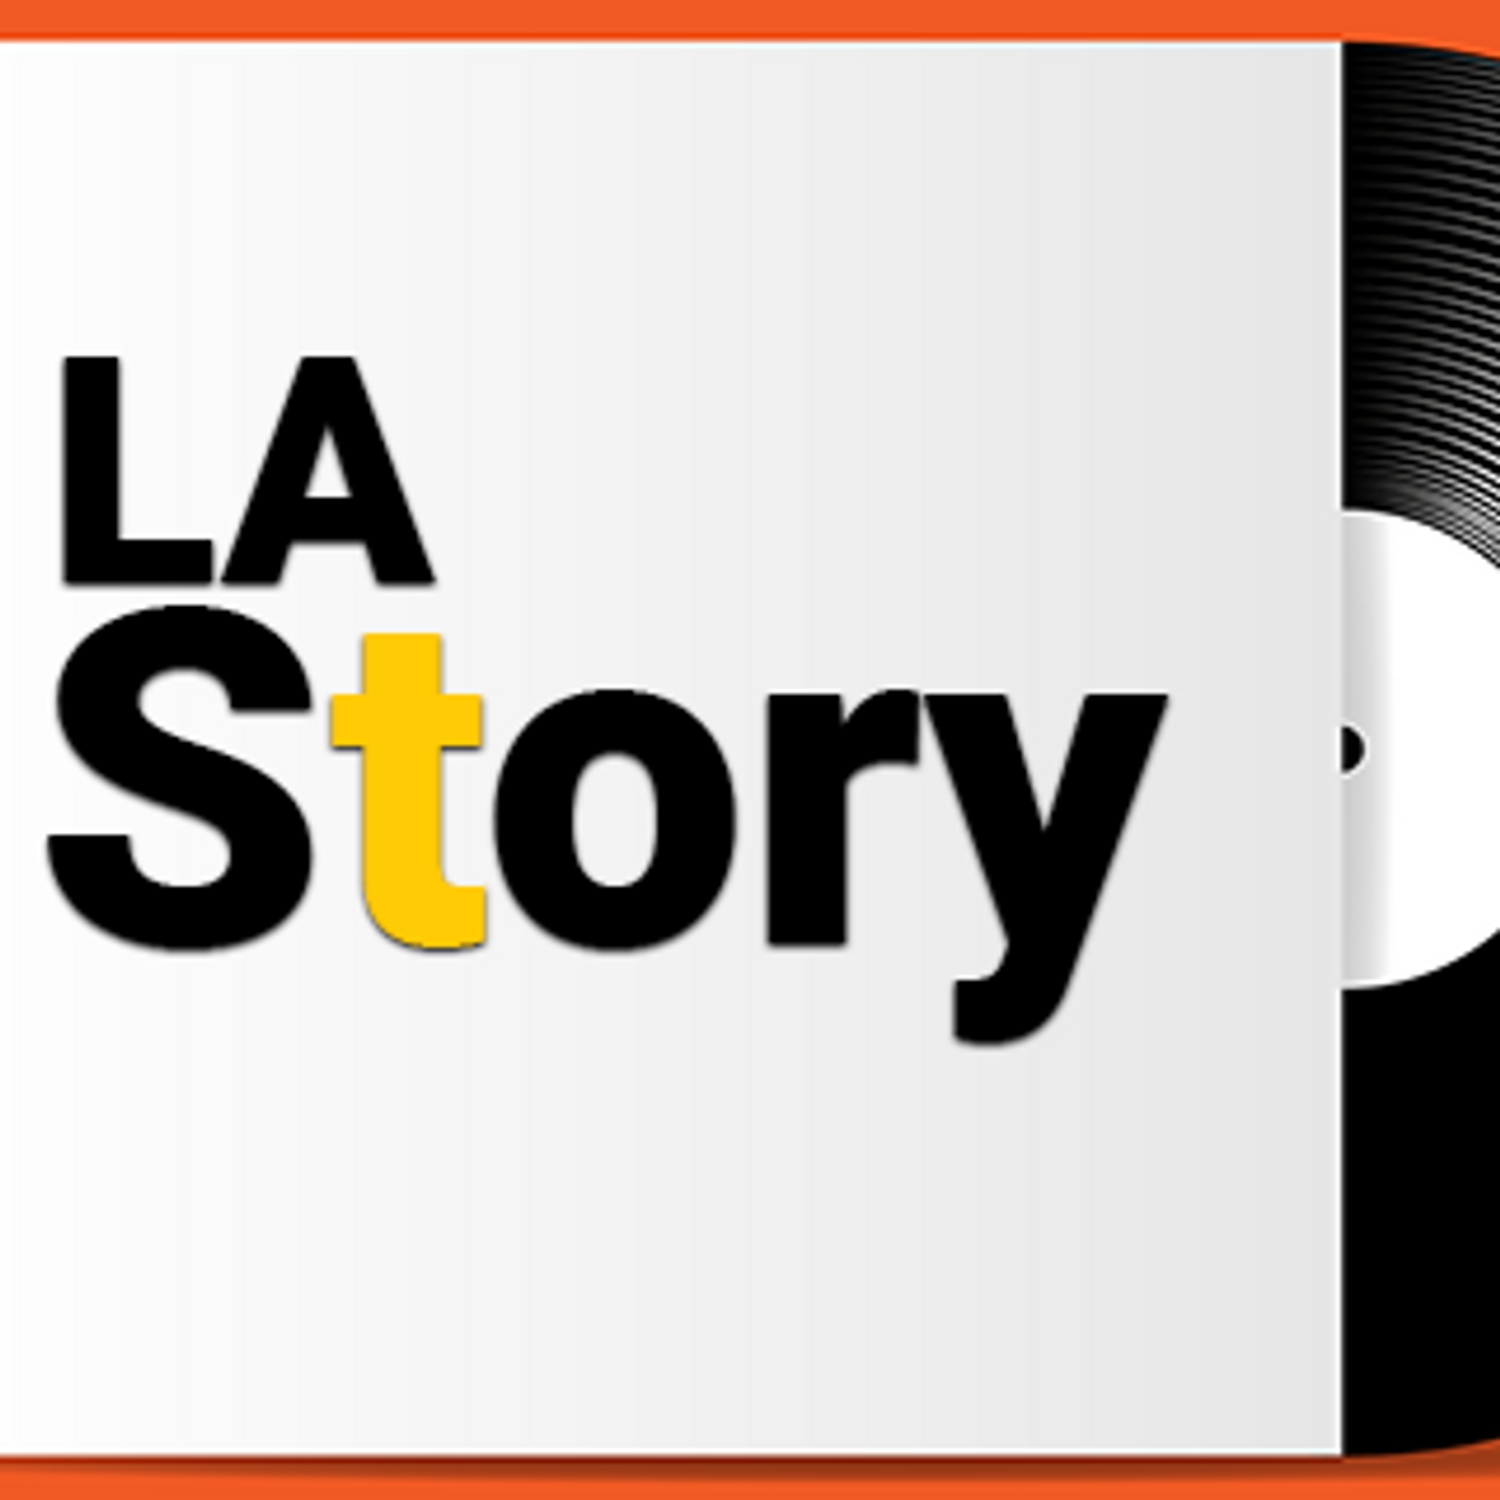 Hit West - La Story - Header